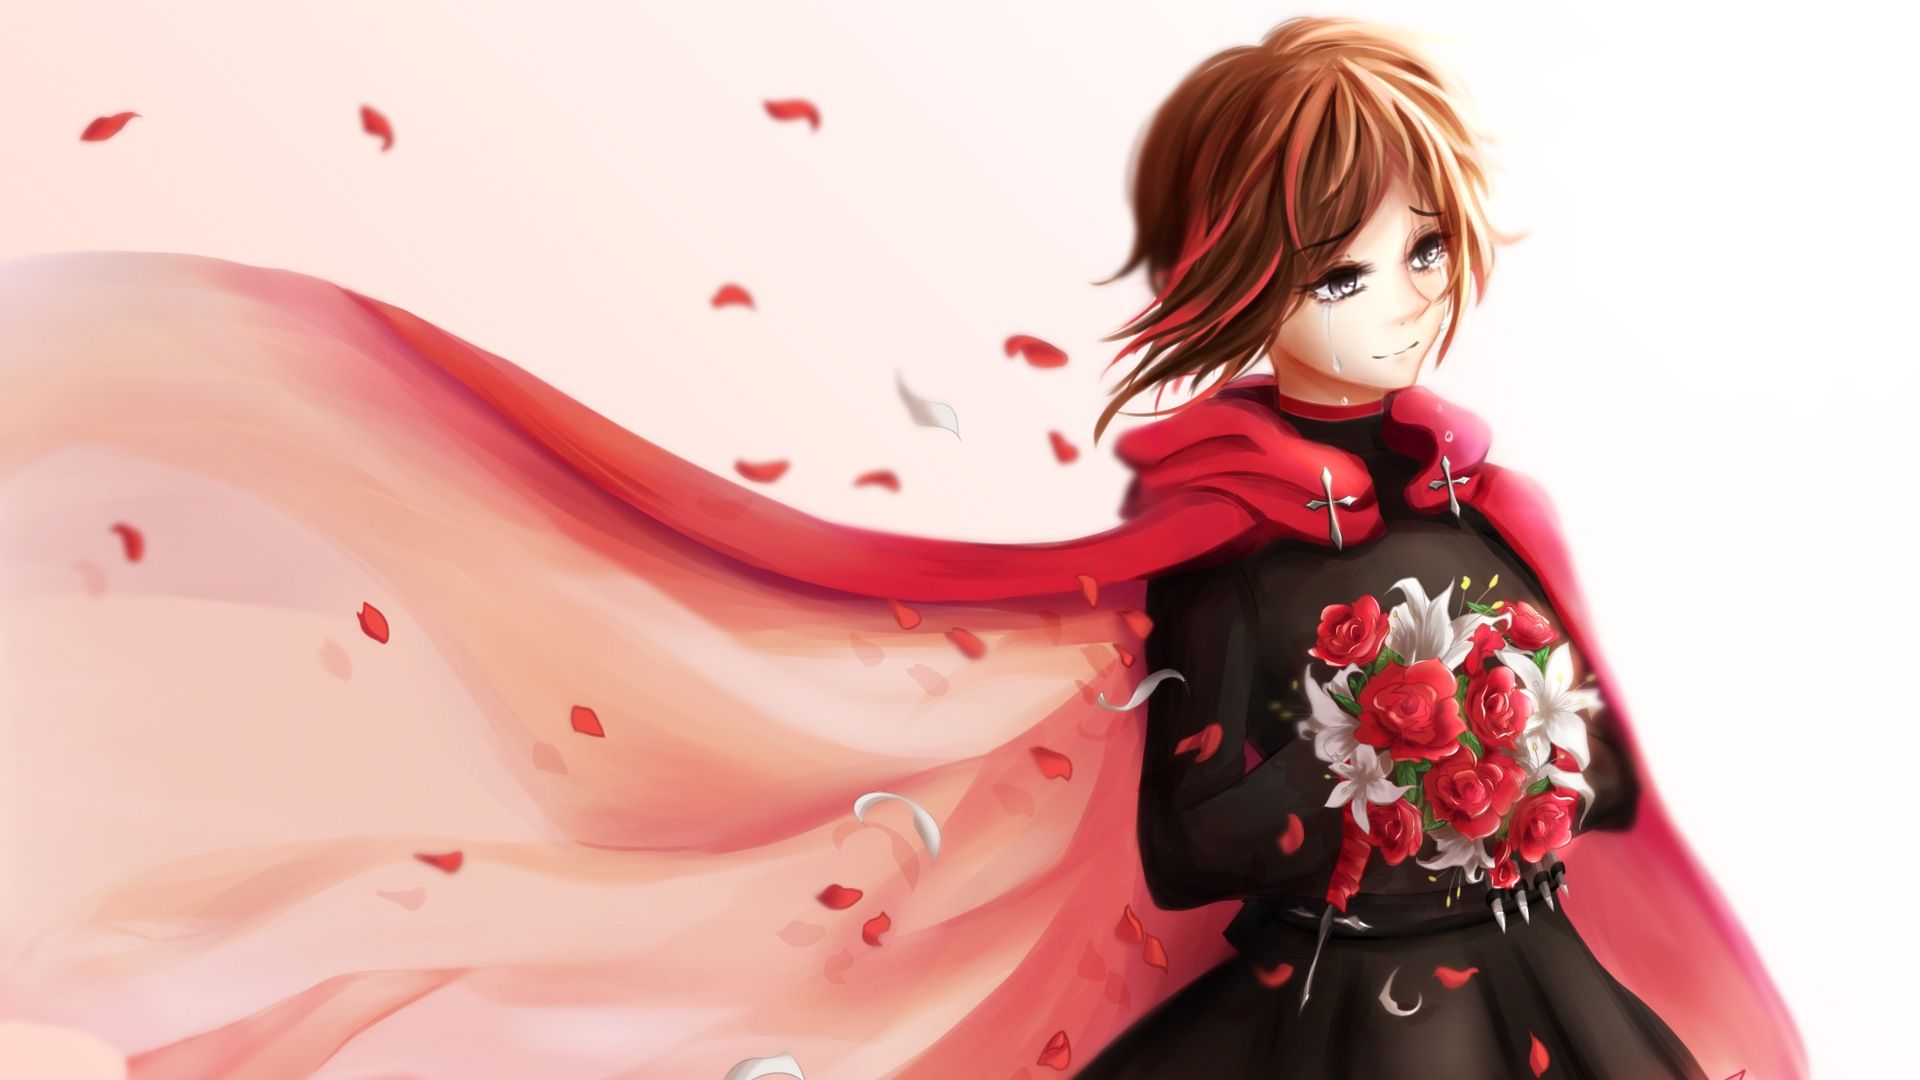 rwby, ruby rose, anime Wallpaper, HD Anime 4K Wallpaper, Image